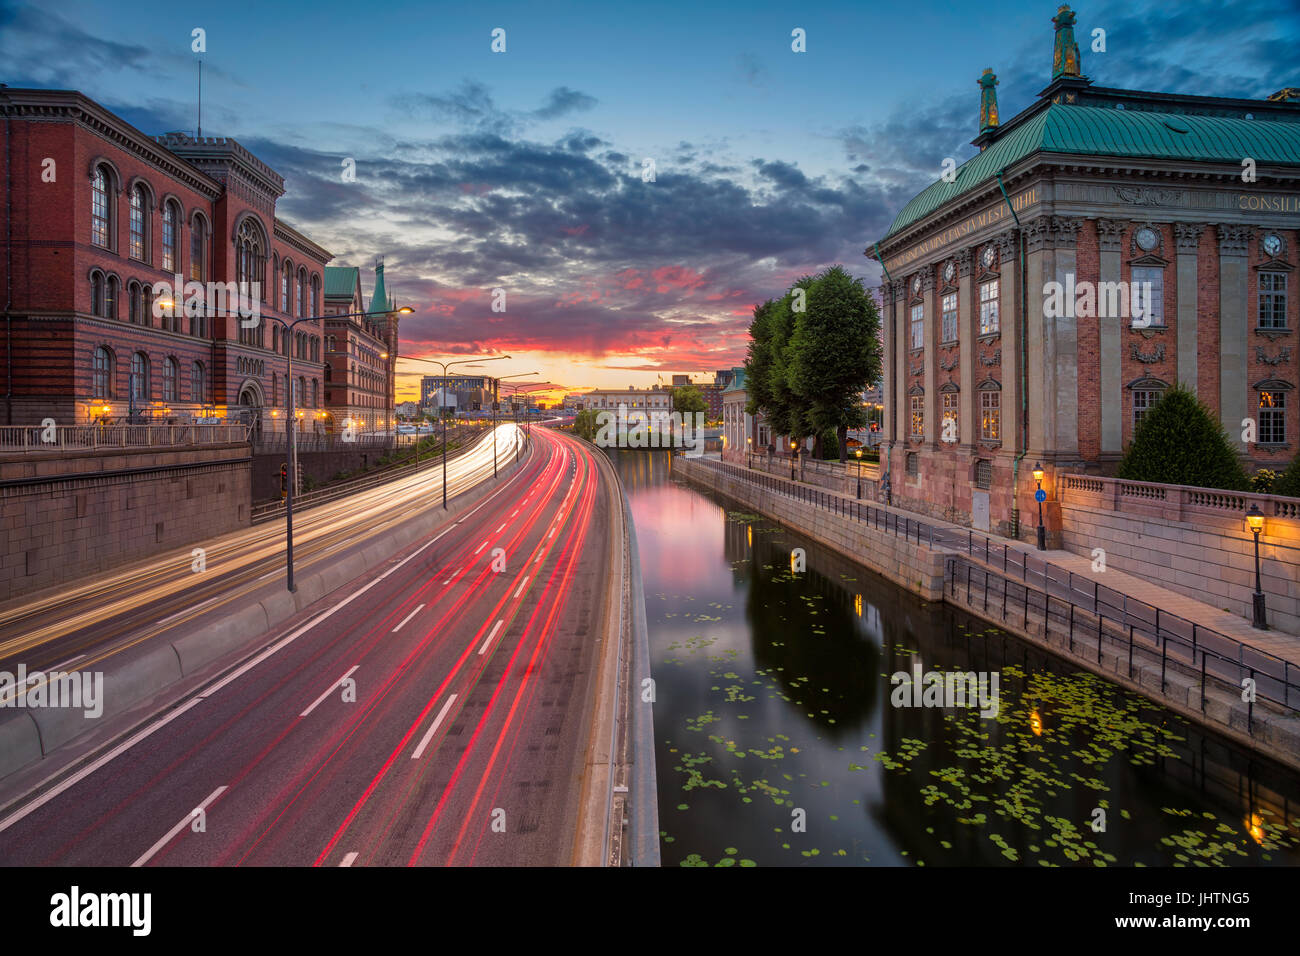 Stockholm. Image of old town Stockholm, Sweden during sunset. Stock Photo